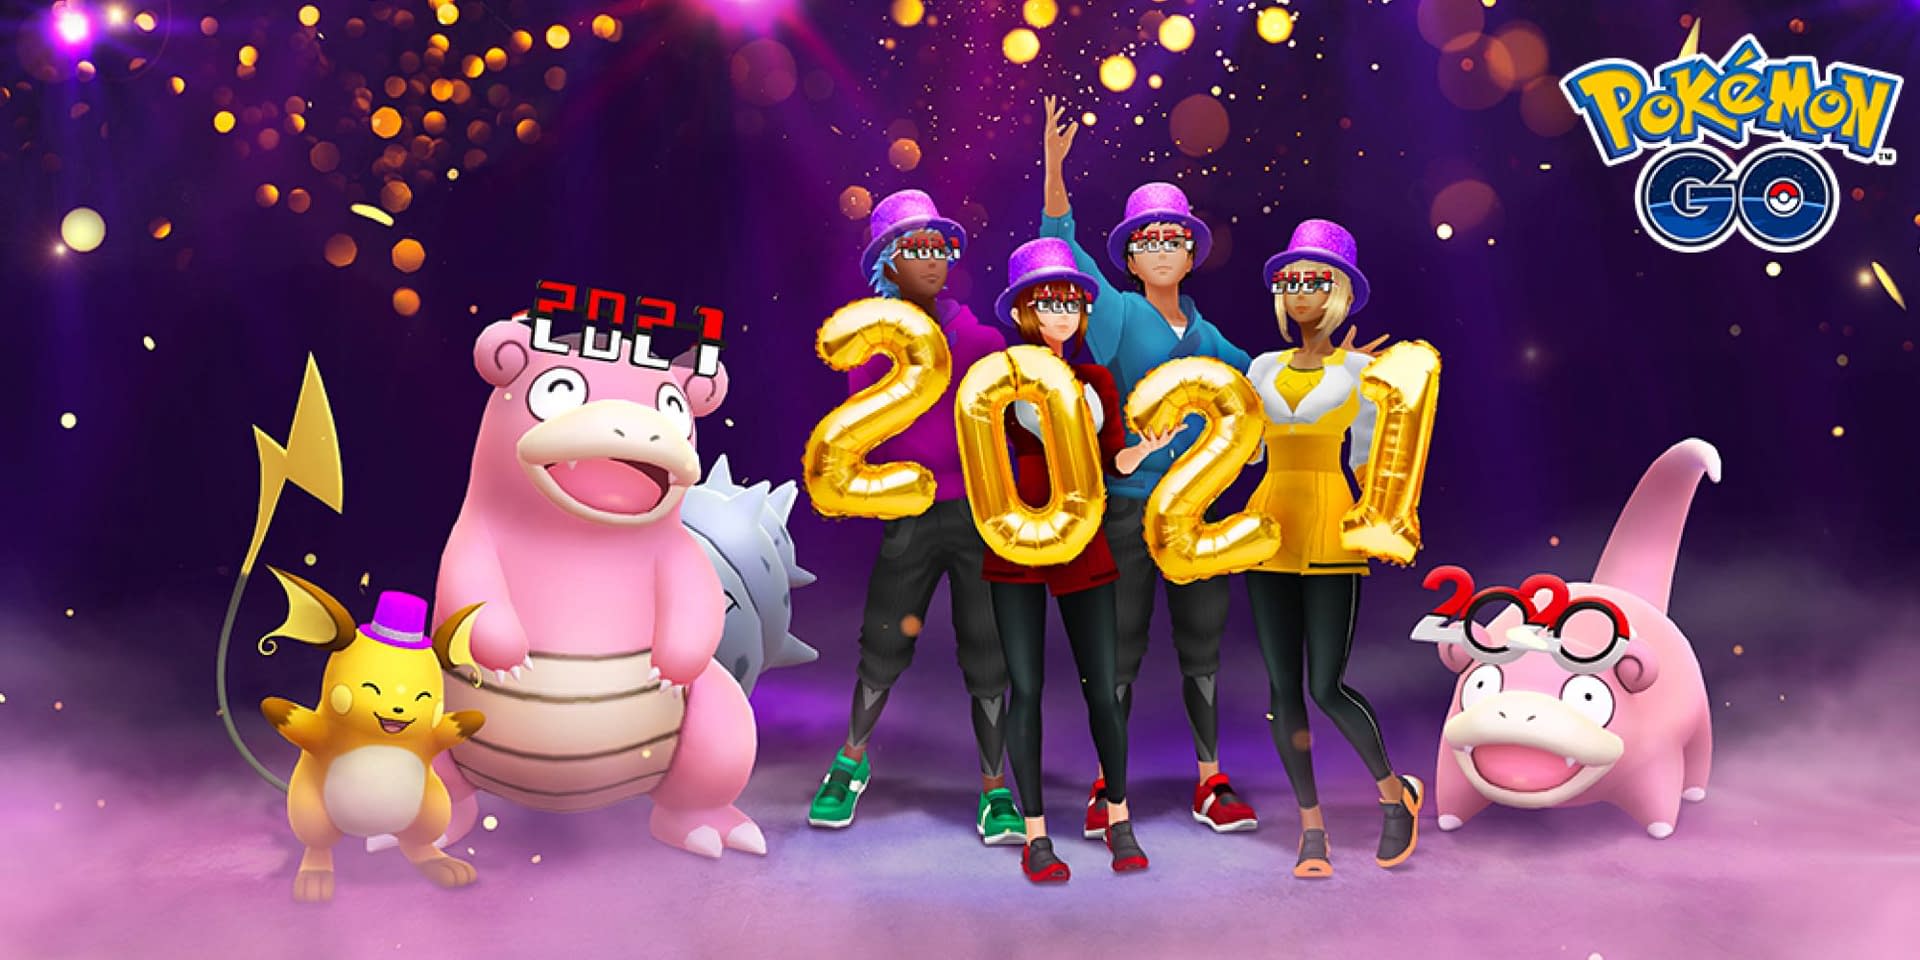 Pokémon GO New Year’s 2021 Celebration Event Review